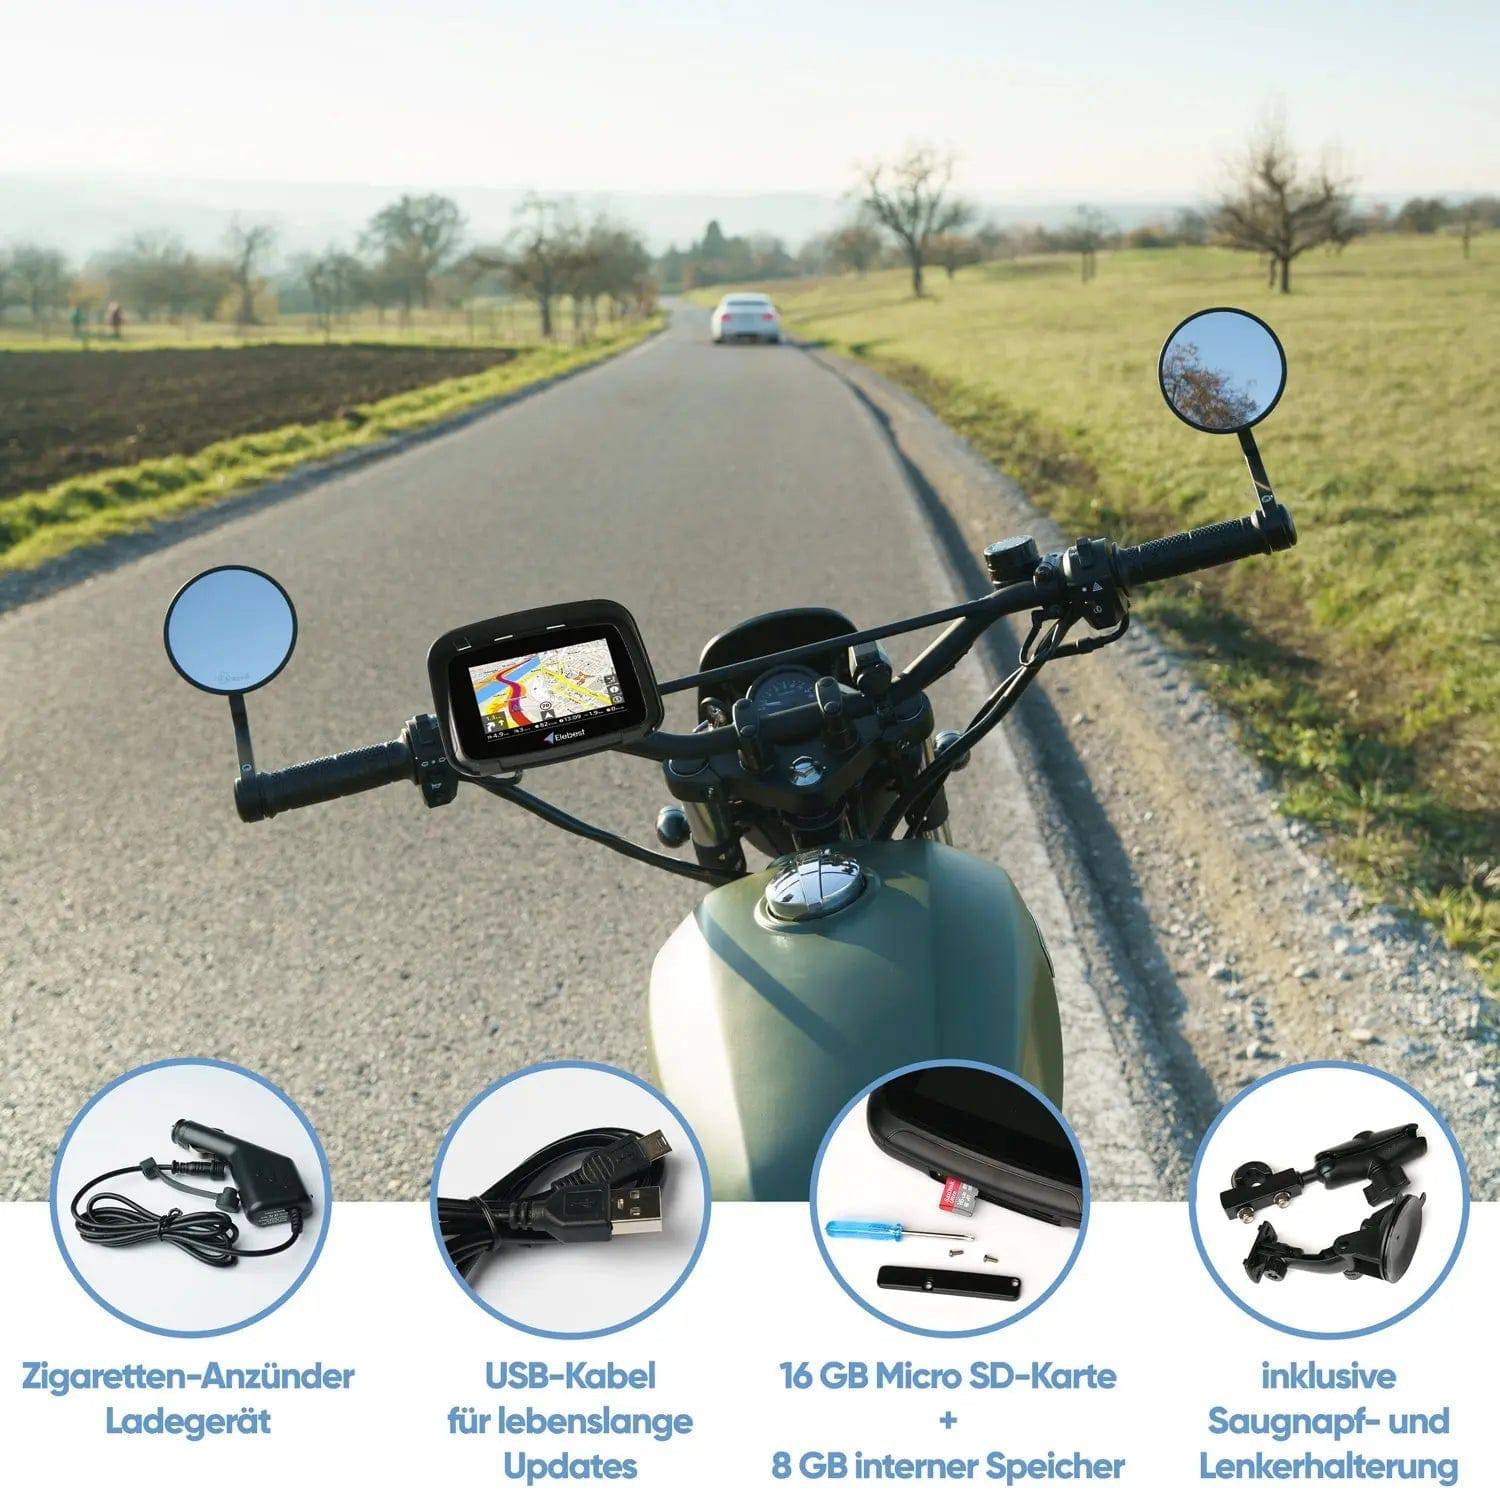 Elebest W5 Motorrad-Navi mit 5 Zoll Display